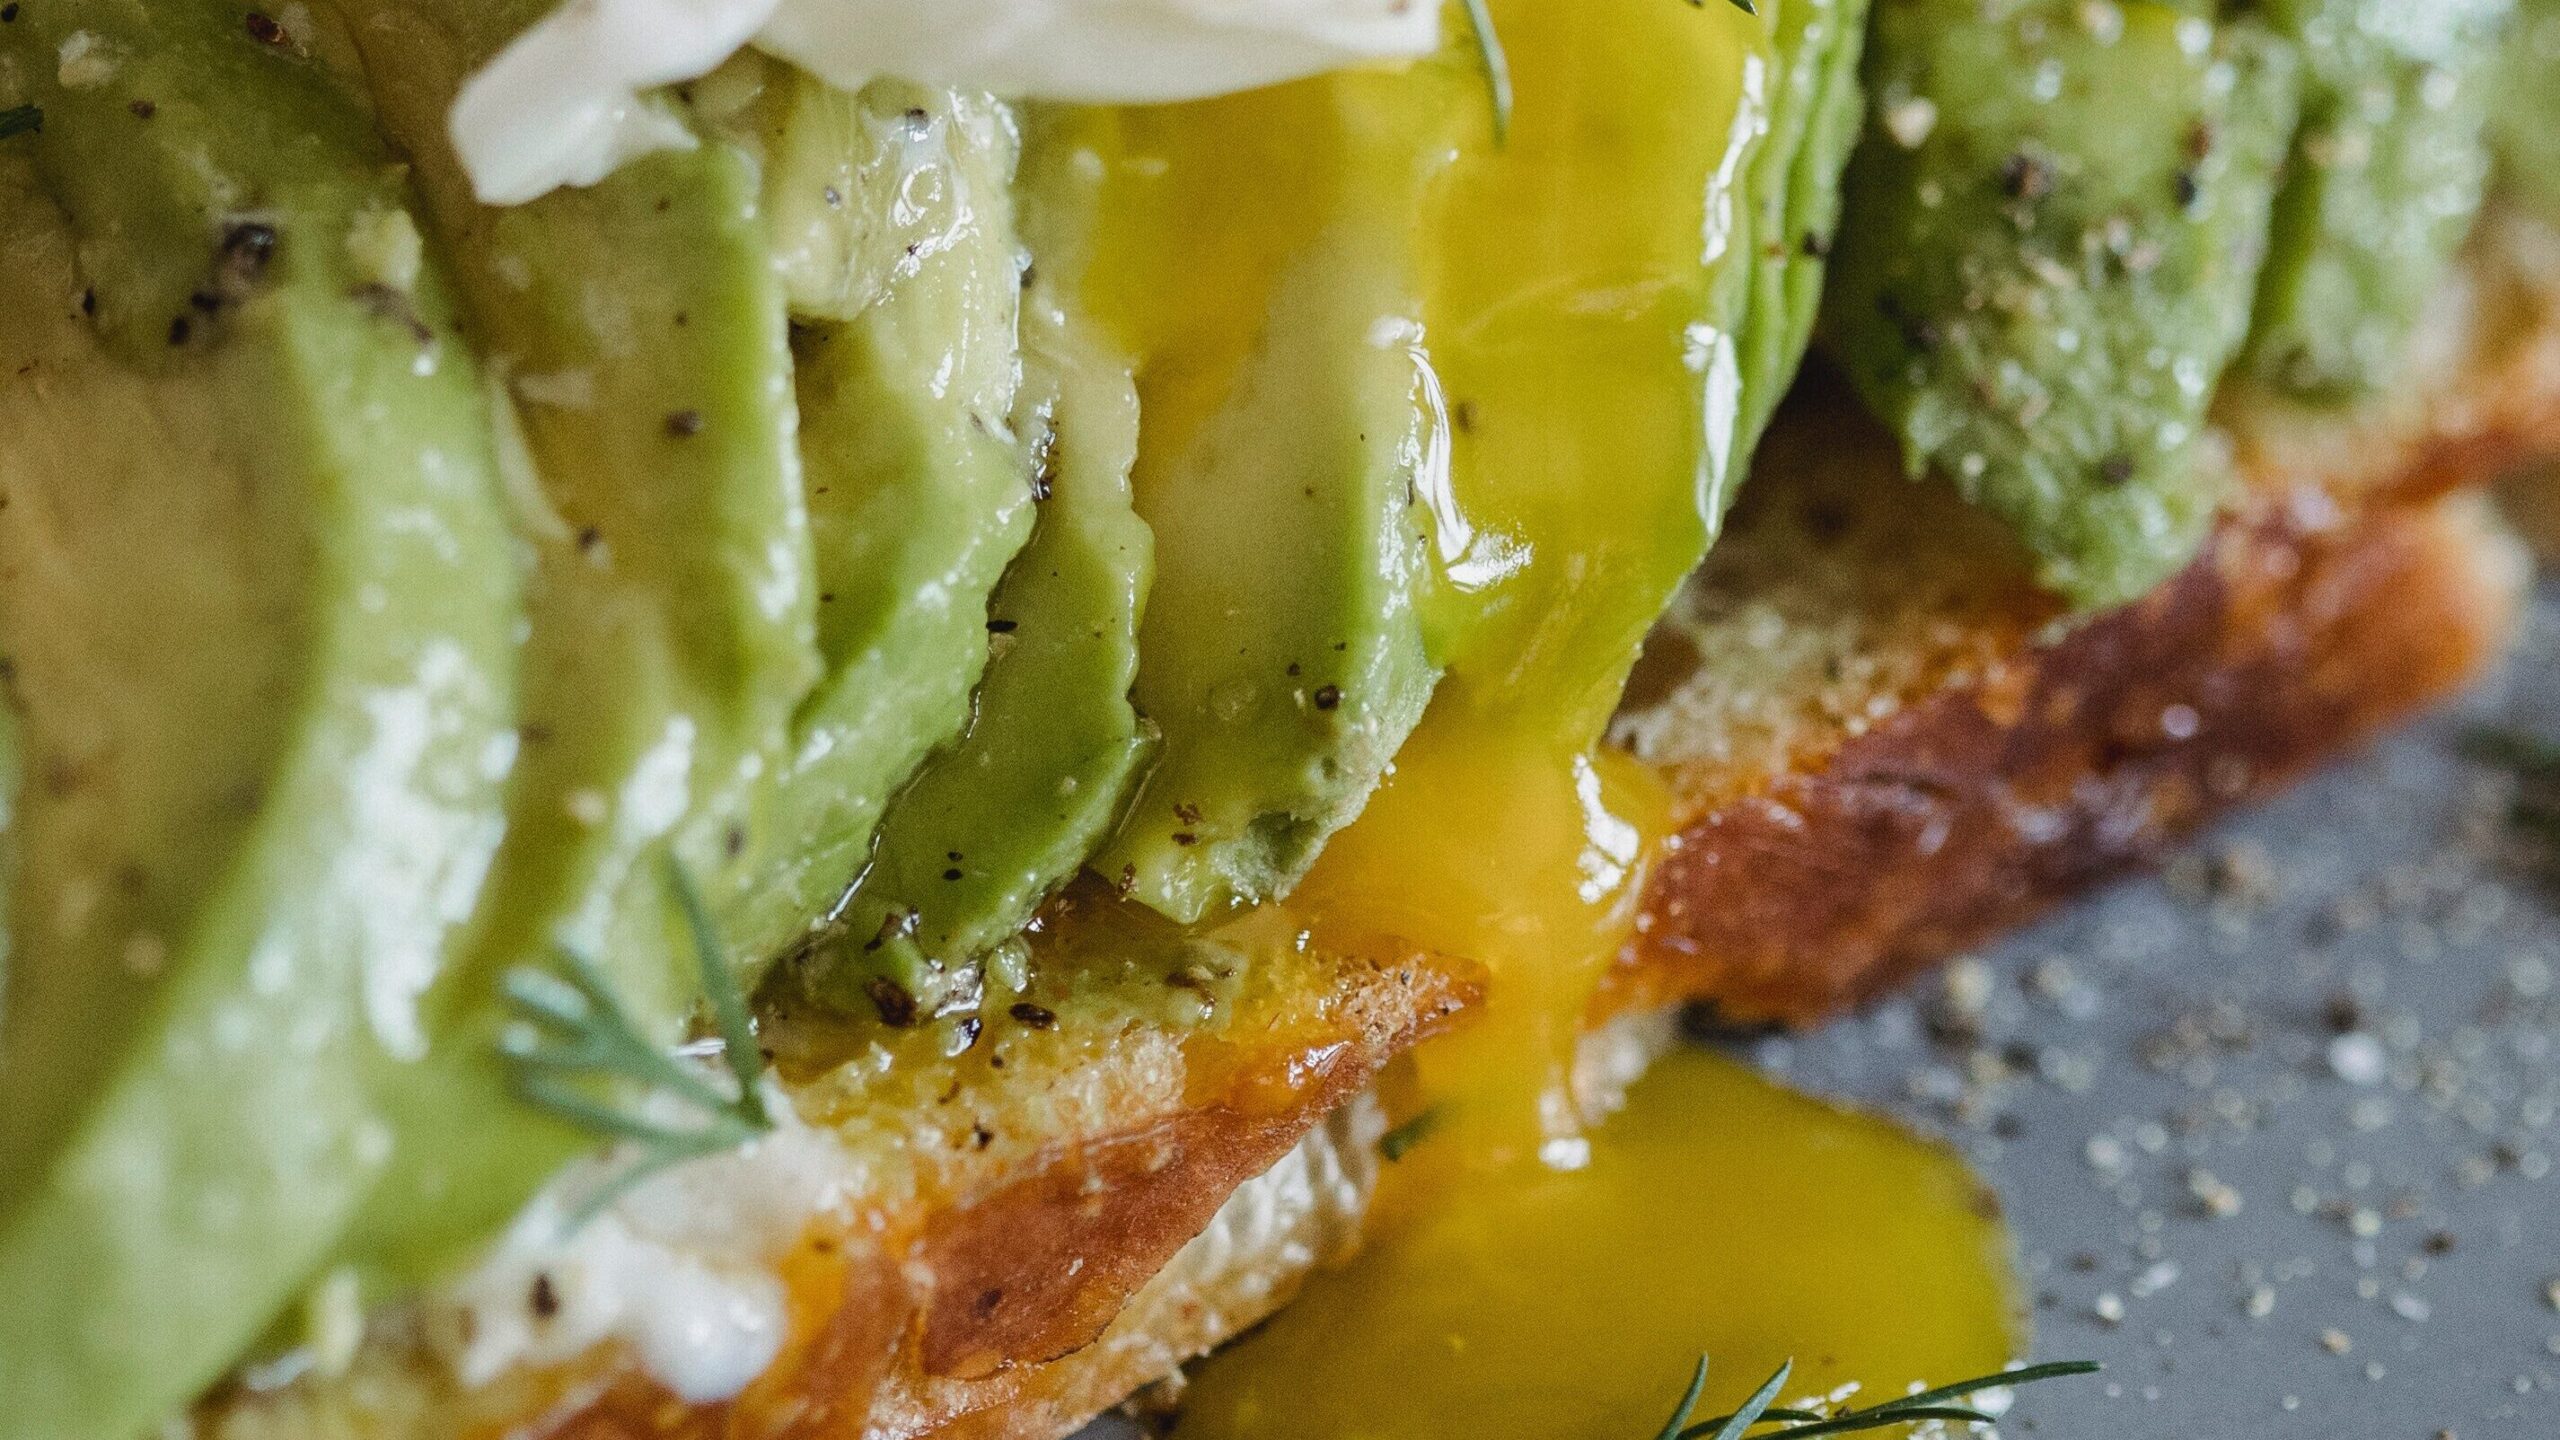 Weight loss dinner idea 3: Avocado on toast.